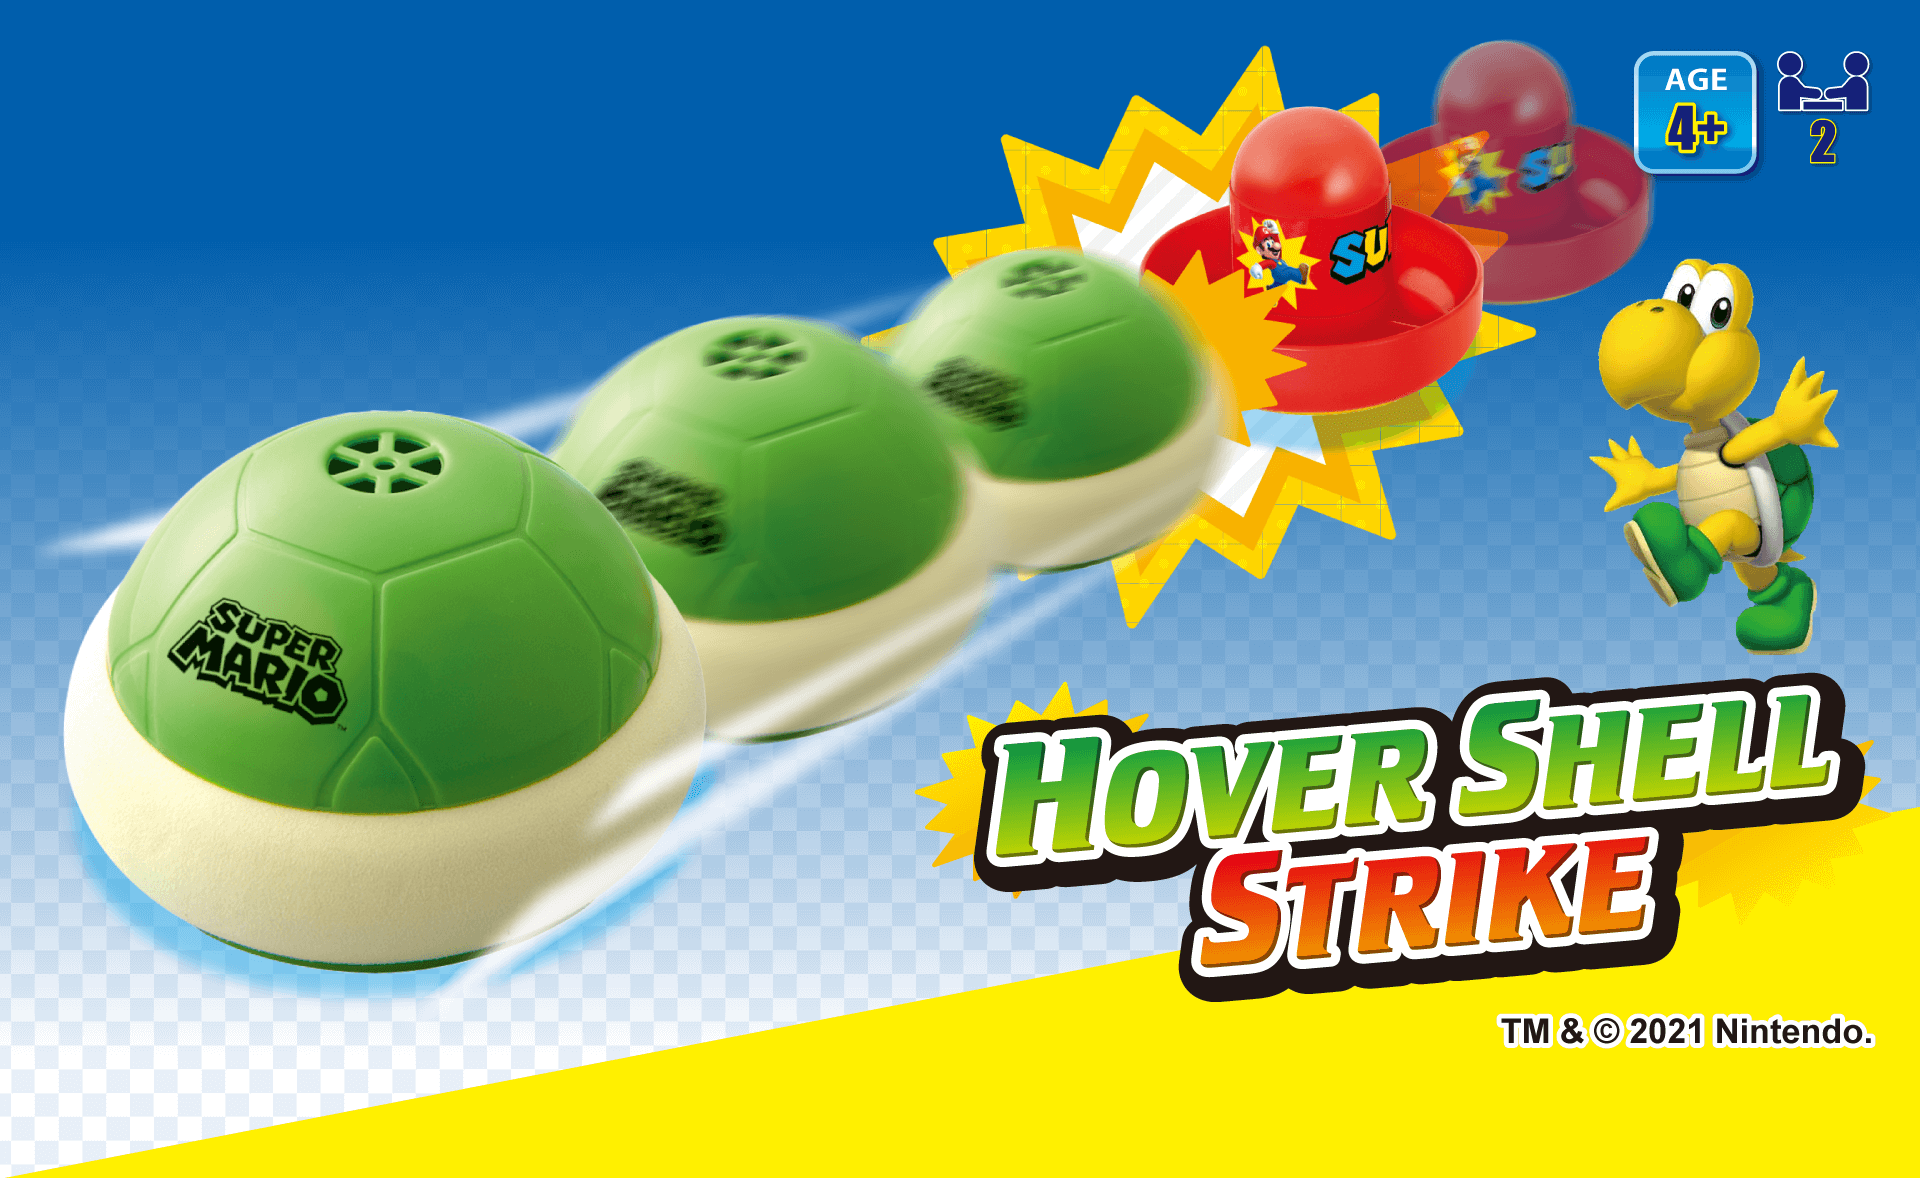 Super Mario™ HOVER SHELL STRIKE